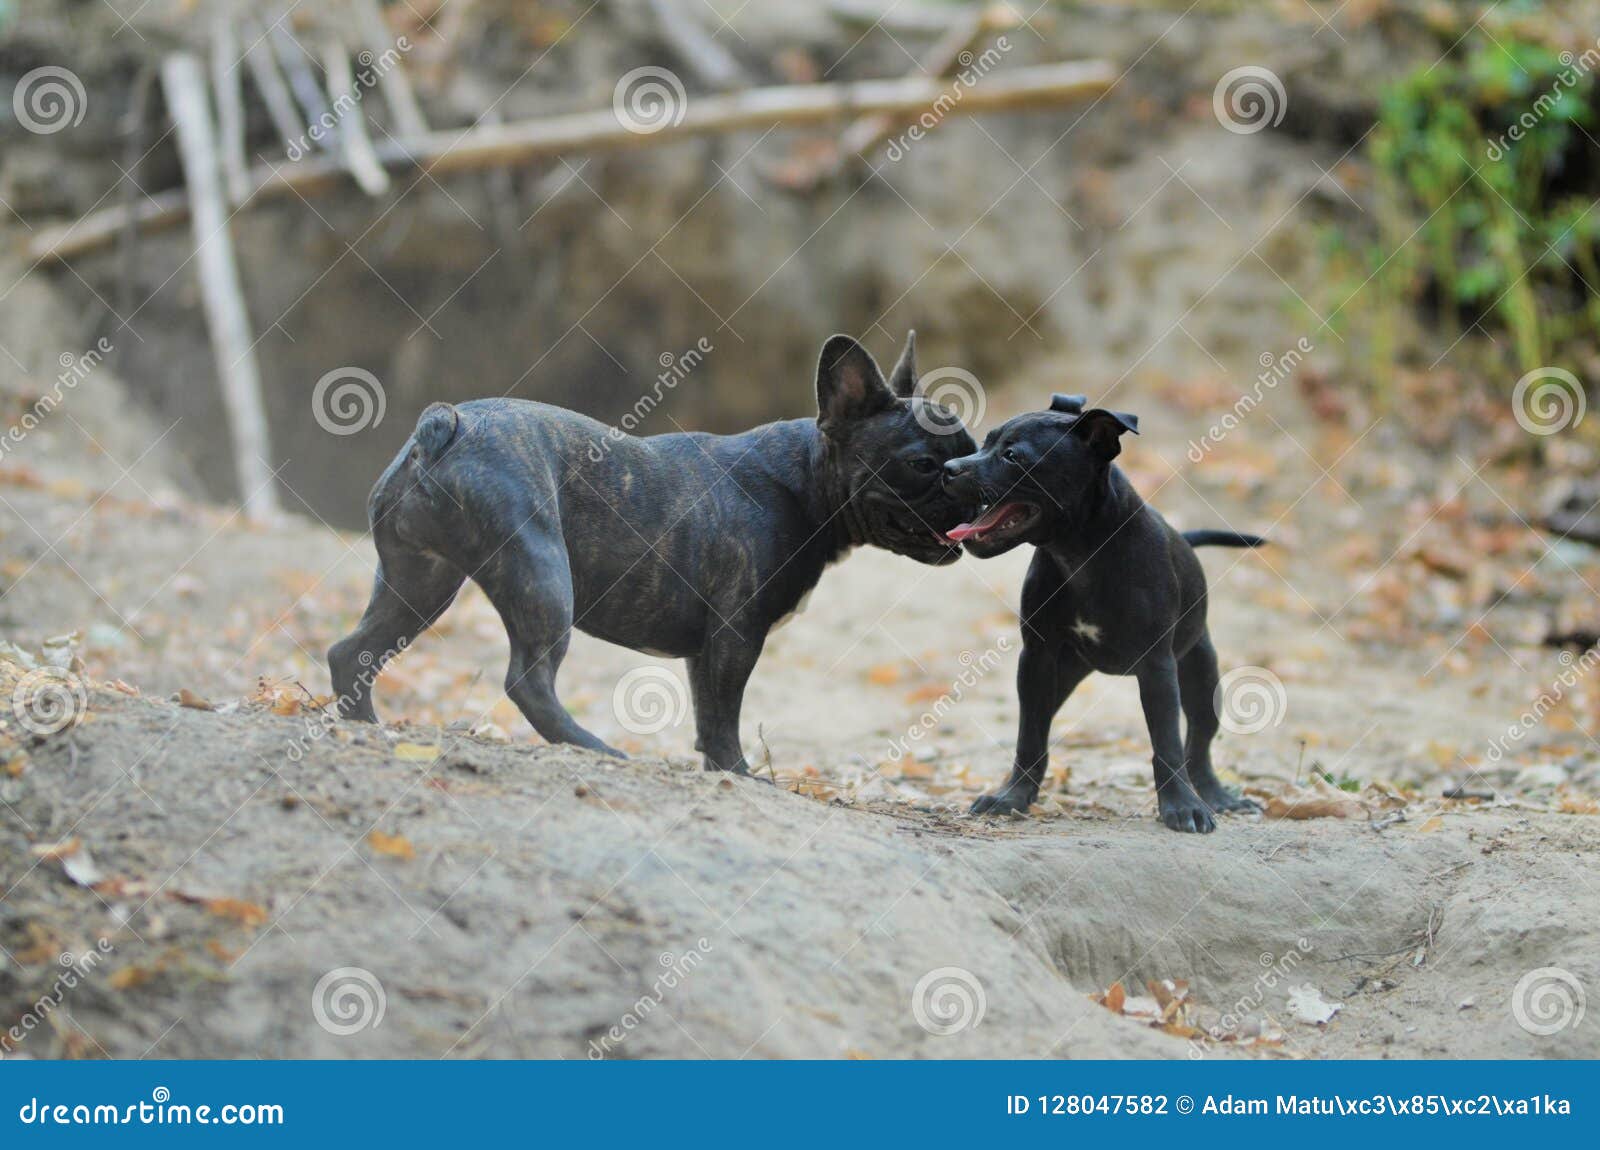 bull terrier x french bulldog